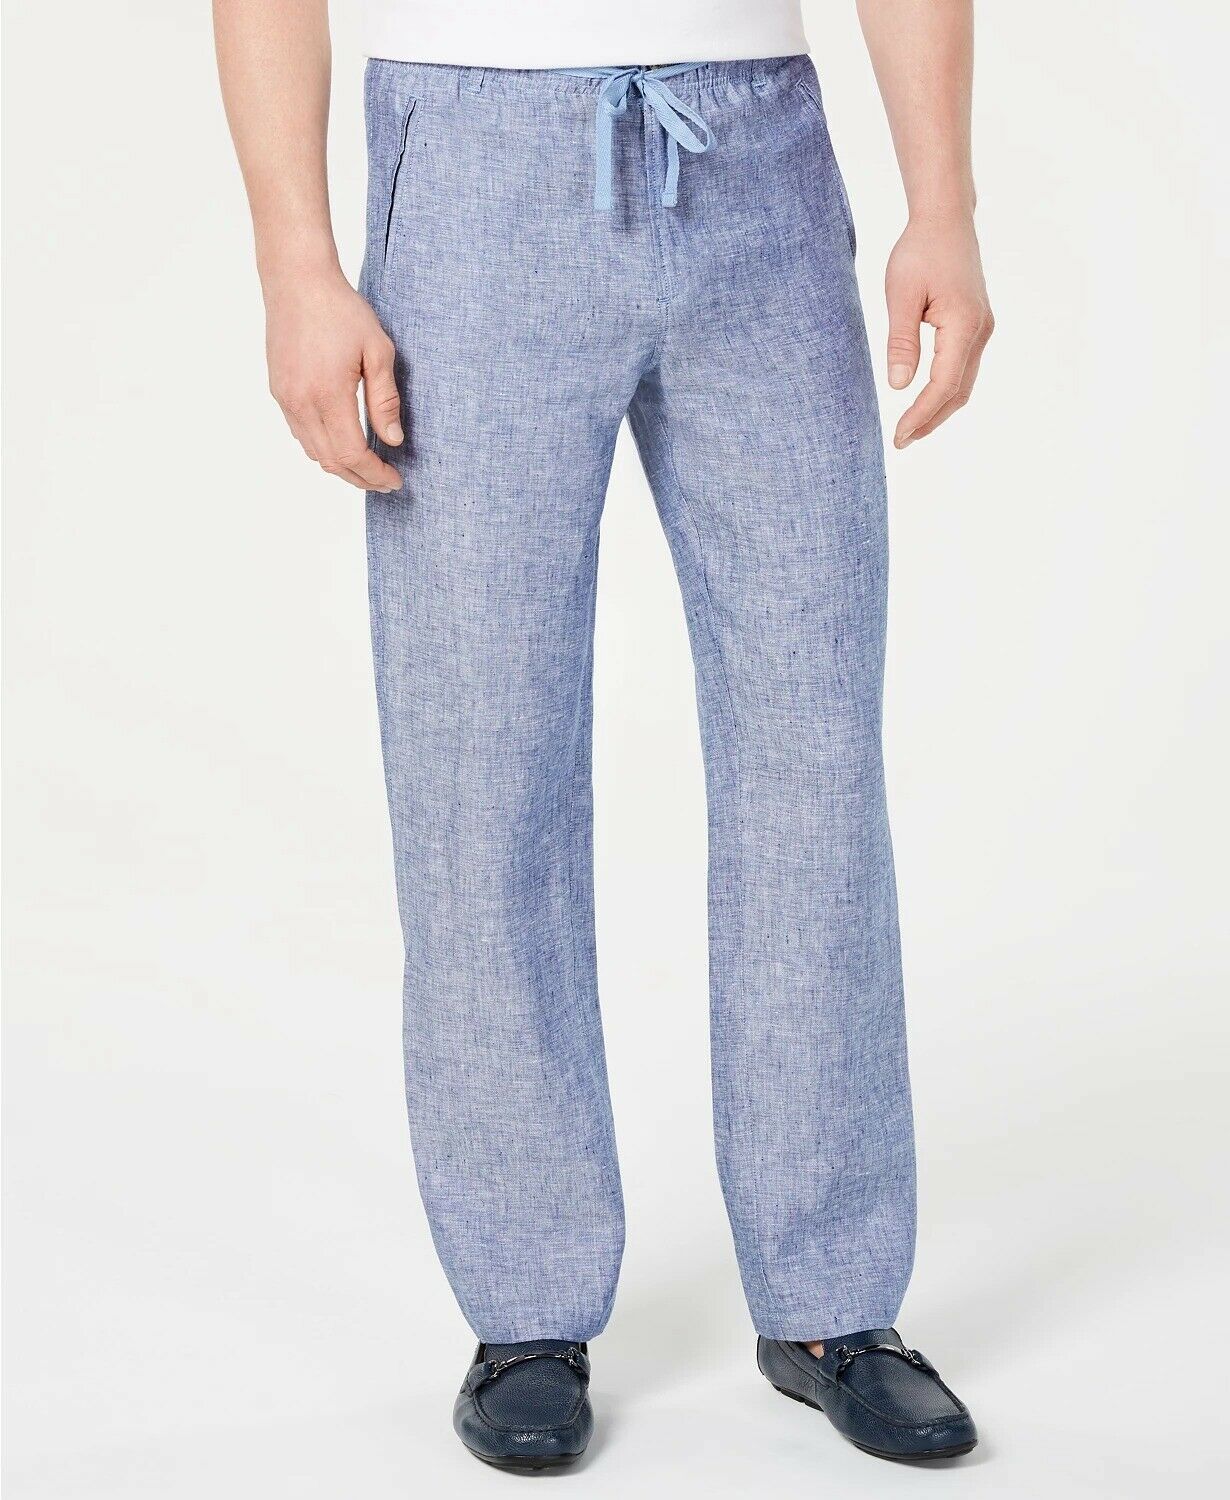 Tasso Elba CHAMBRAY Men's Linen Drawstring Casual Pants, US X-Large